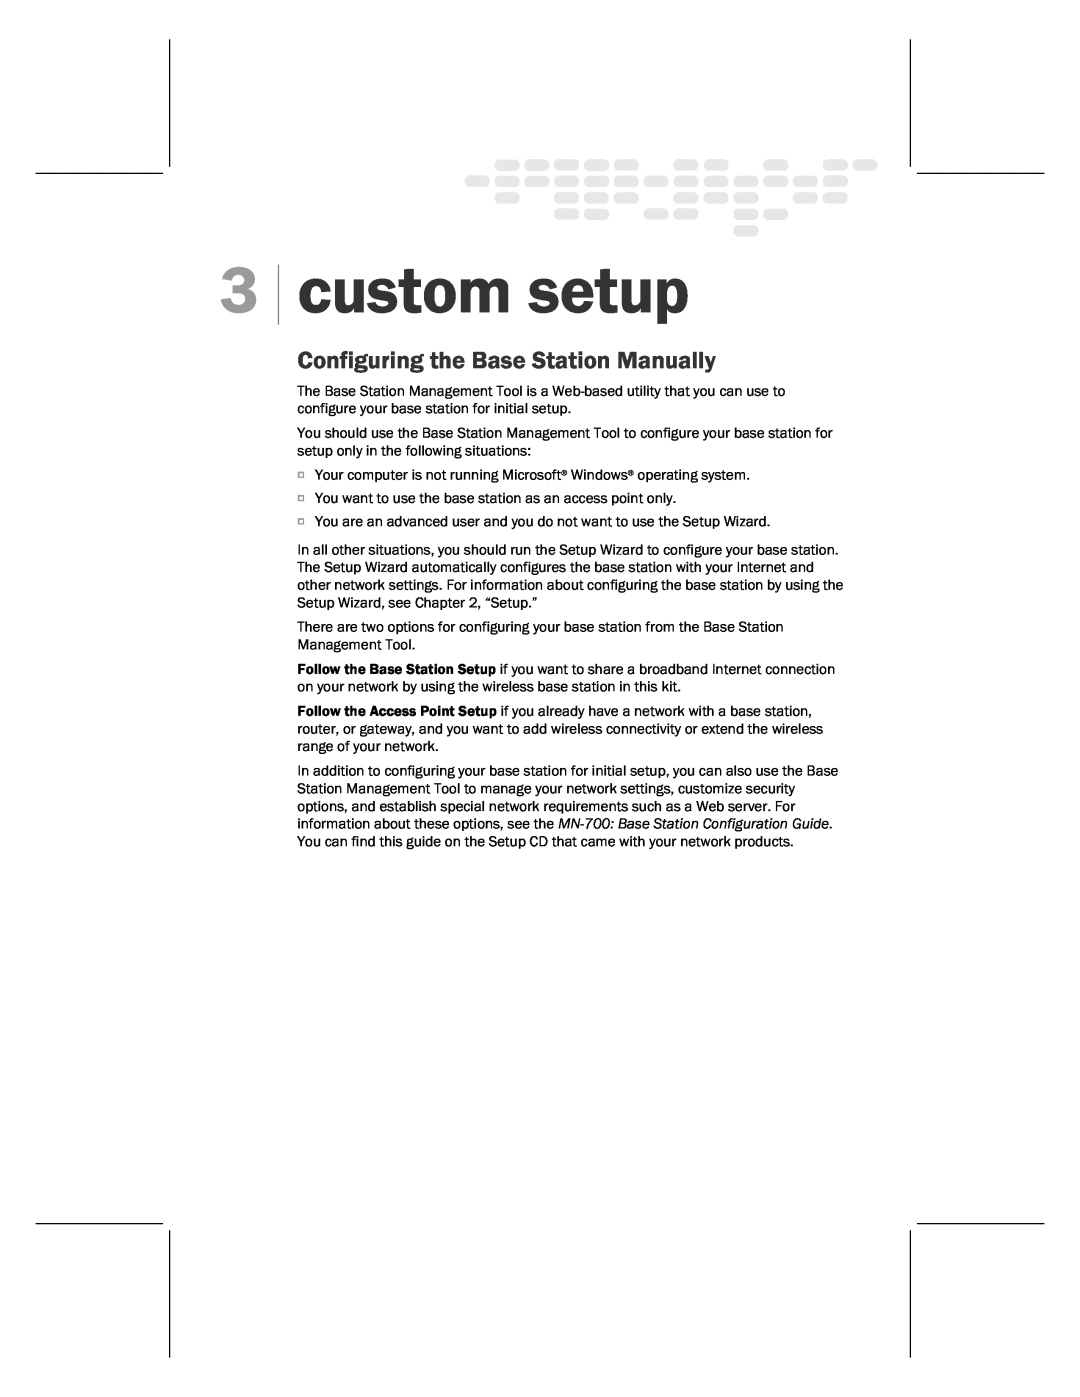 Microsoft MN-820 manual custom setup, Configuring the Base Station Manually 